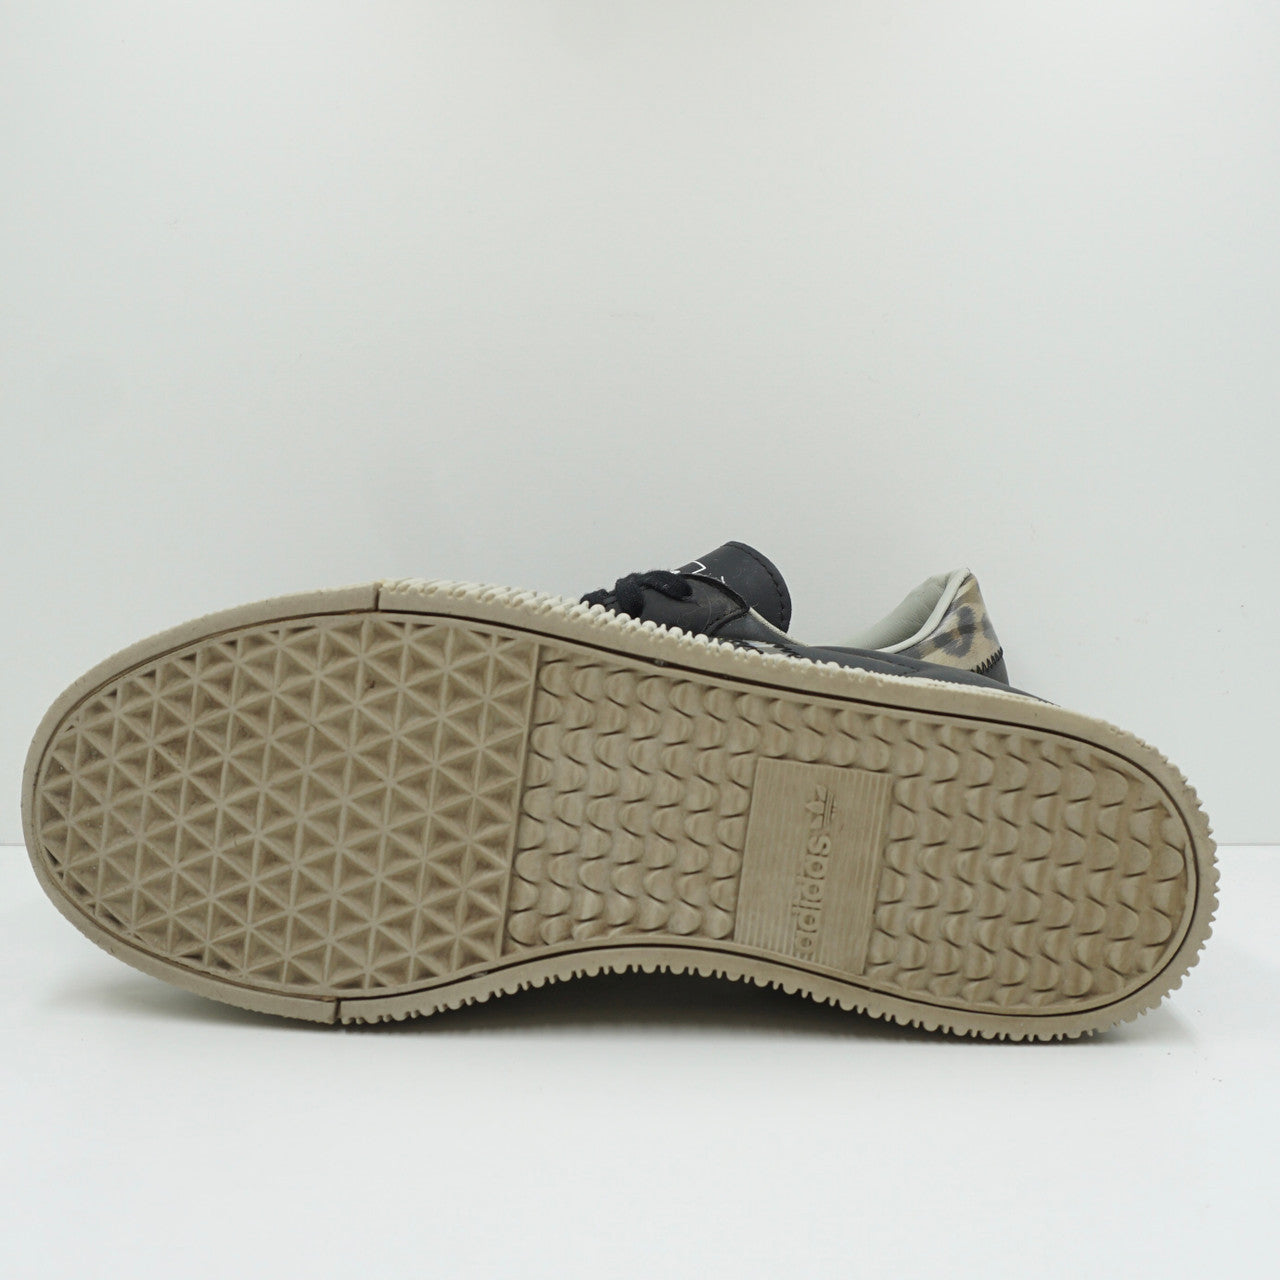 Adidas Sambarose Black Grey (W)